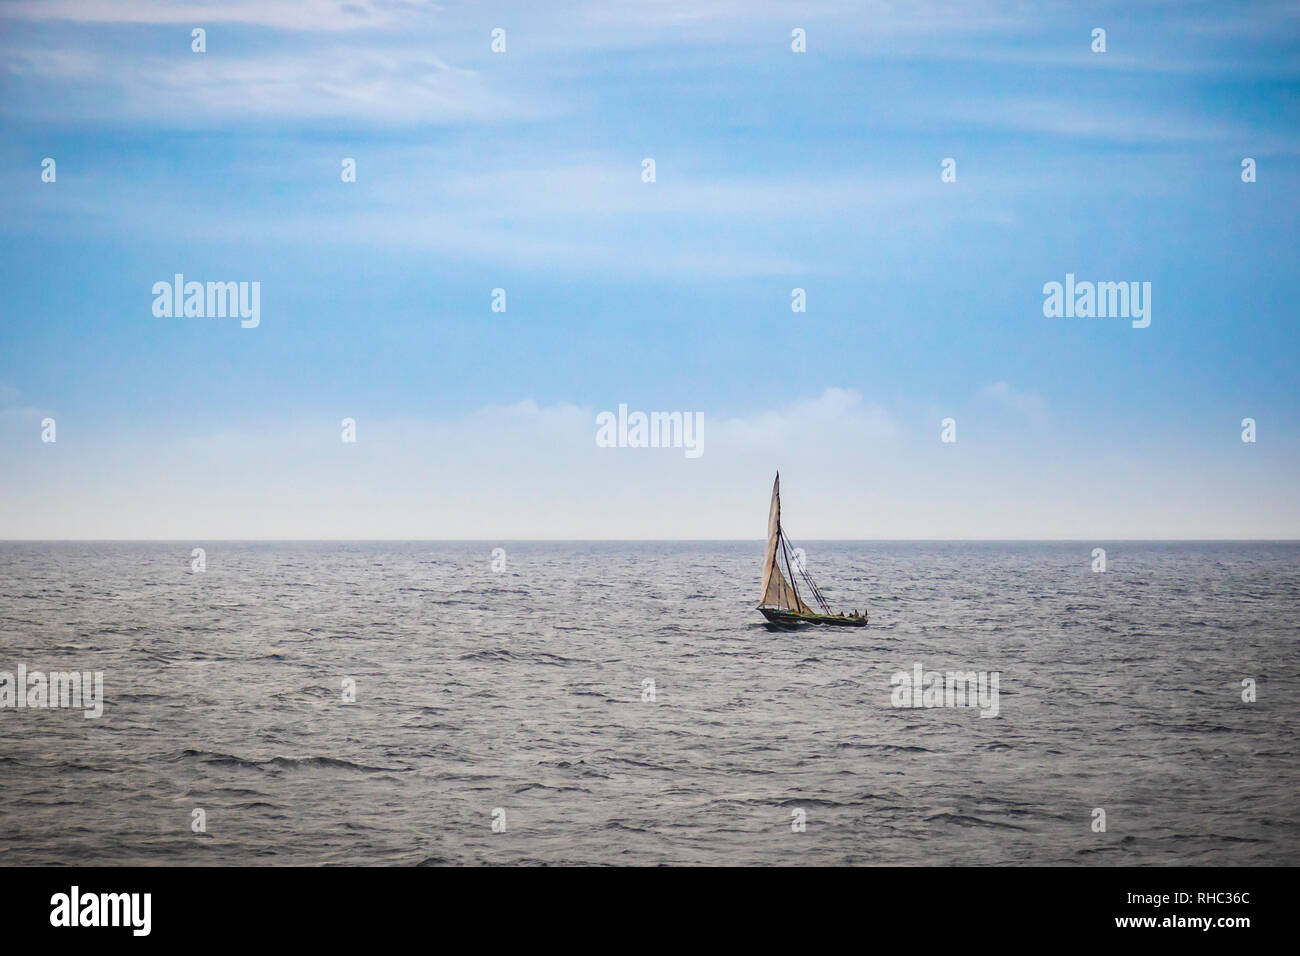 Dhow wooden boat sailing on the Indian Ocean near Zanzibar, Tanzania Stock Photo